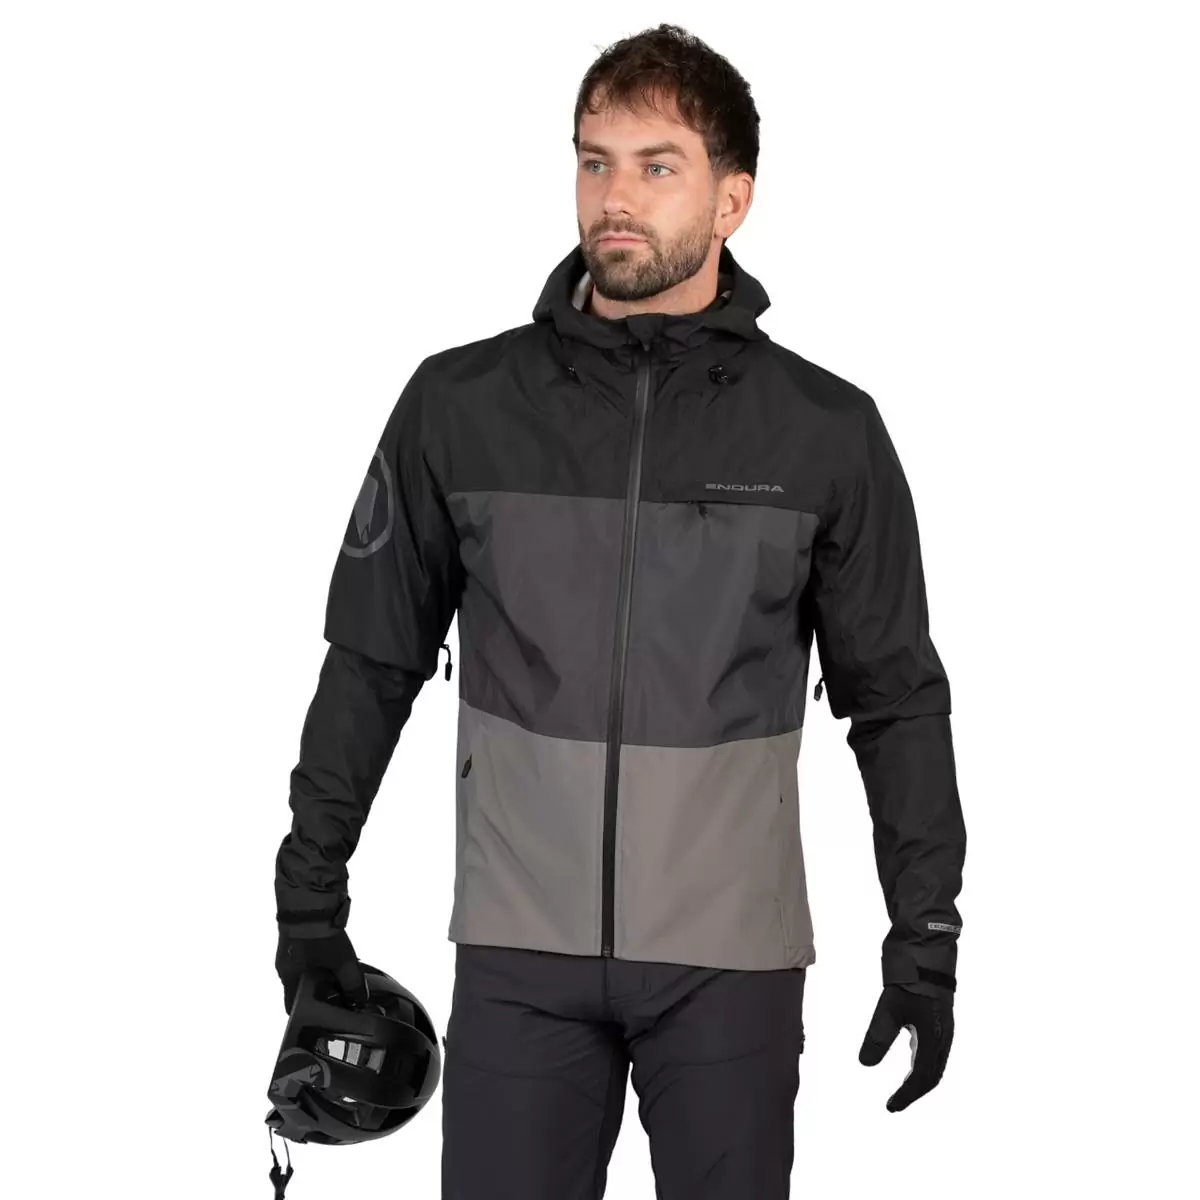 SingleTrack Jacket II Waterproof MTB Jacket Black Size S - image